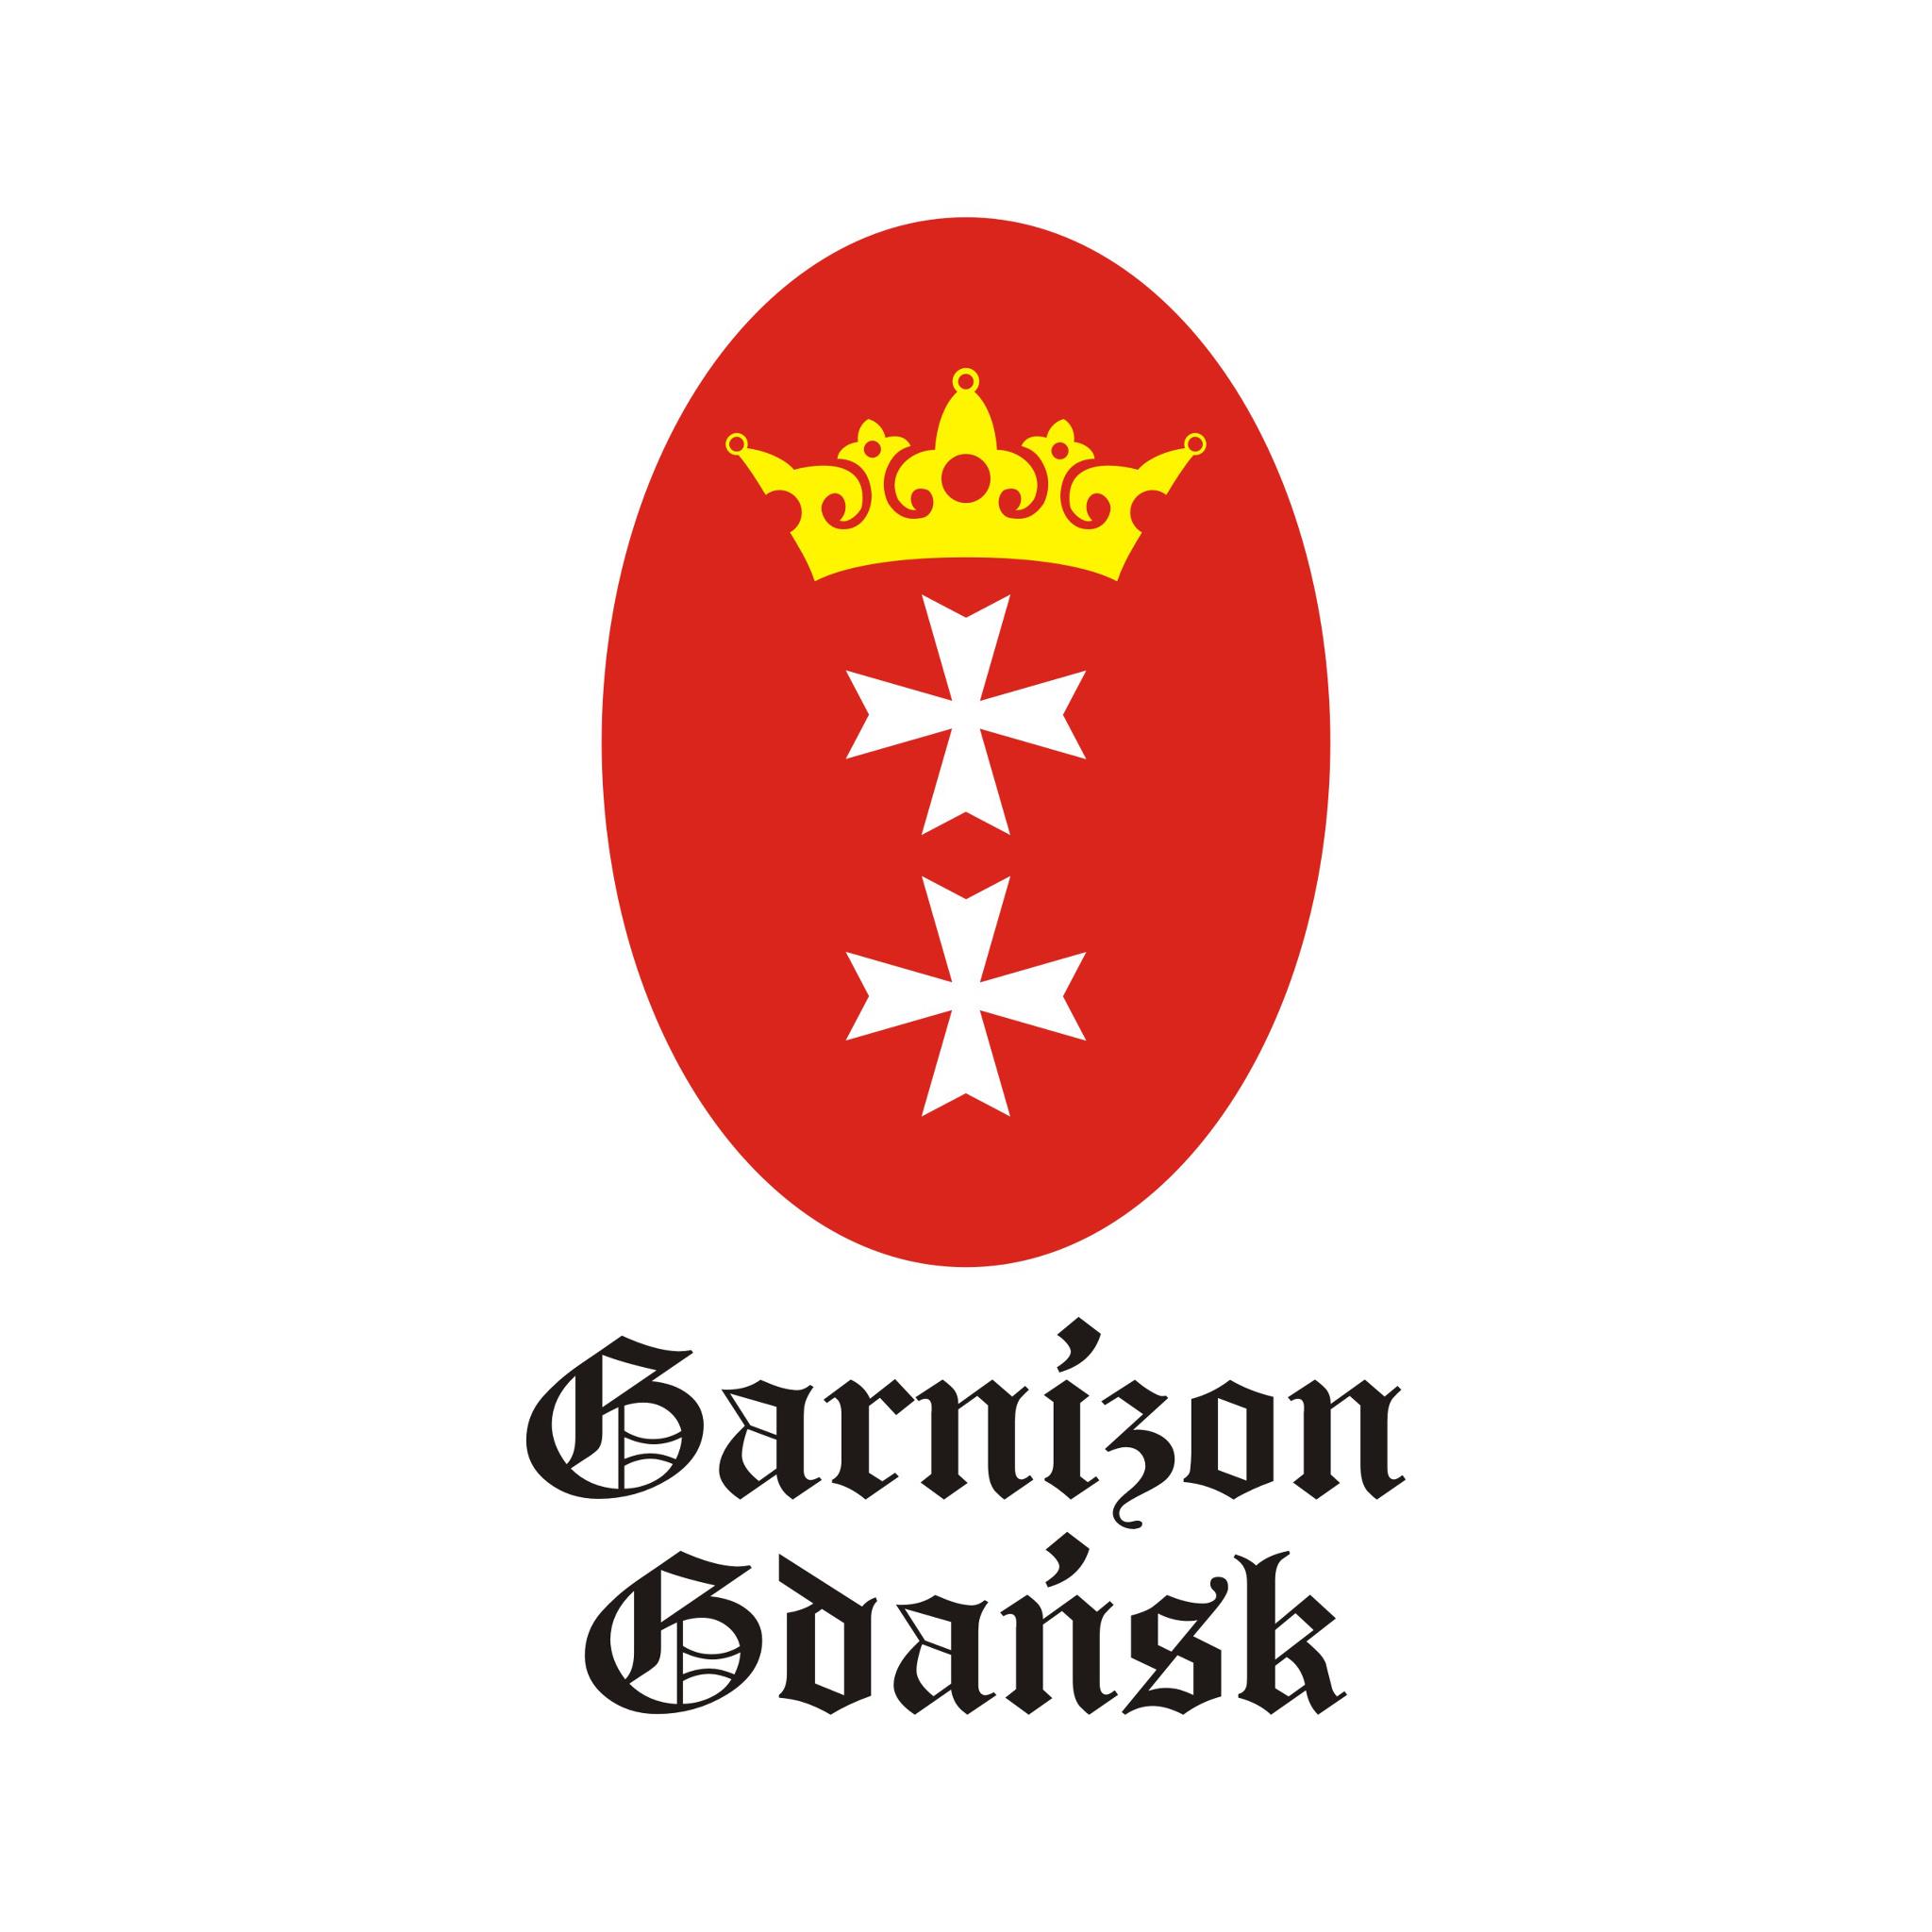 Garnizon Gdansk logo